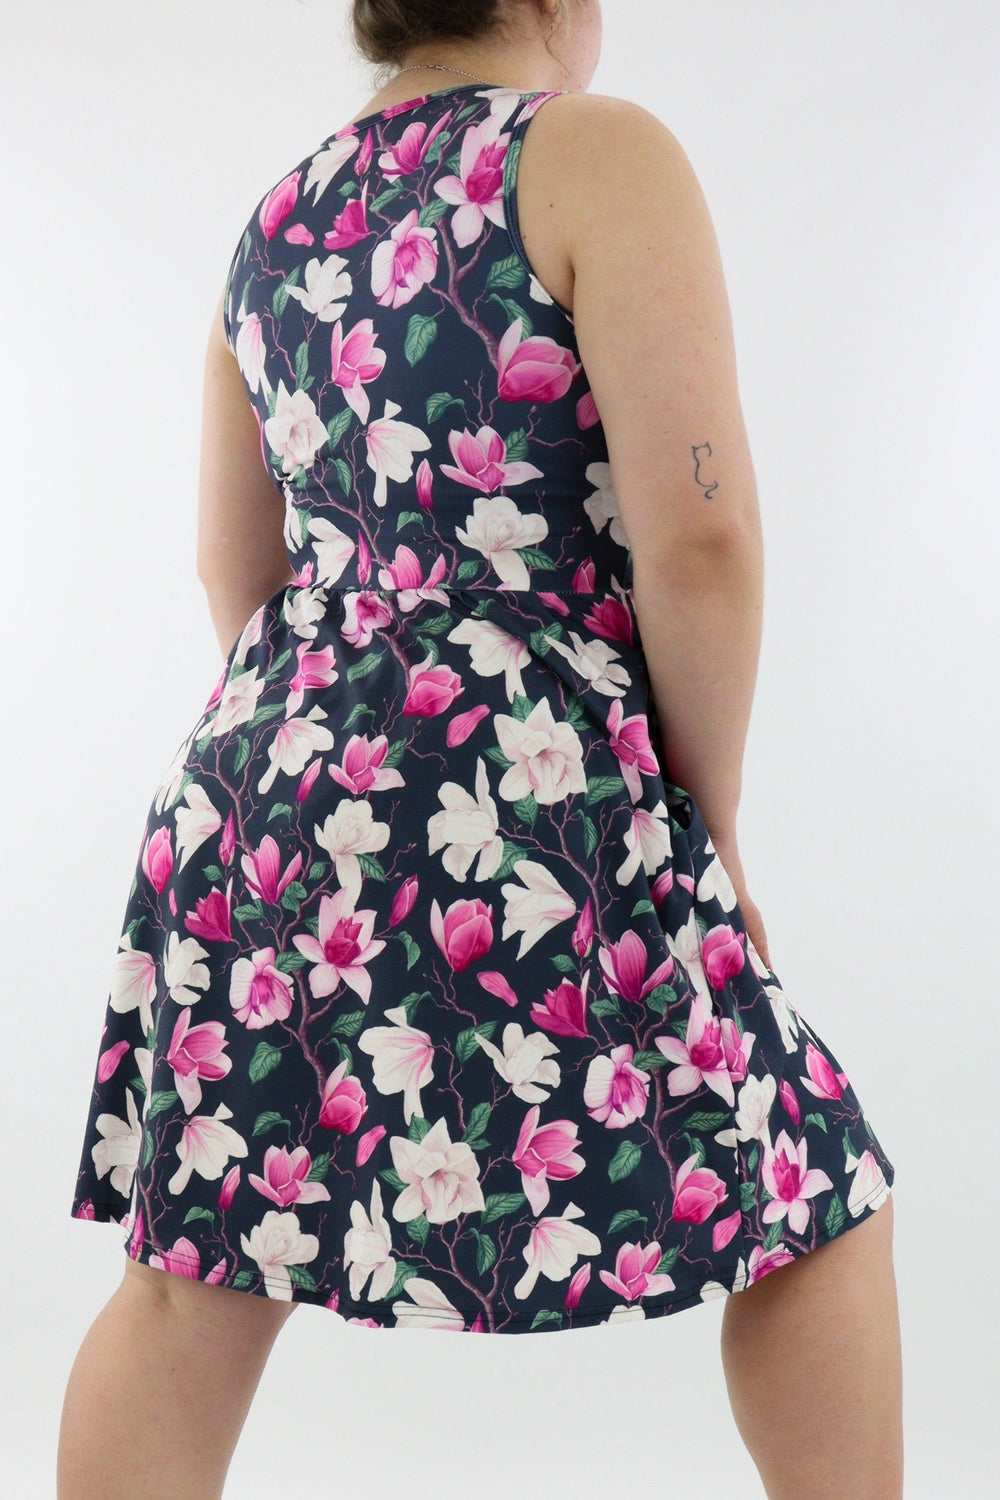 Vintage Magnolia - Sleeveless Skater Dress - Knee Length - Side Pockets - Pawlie